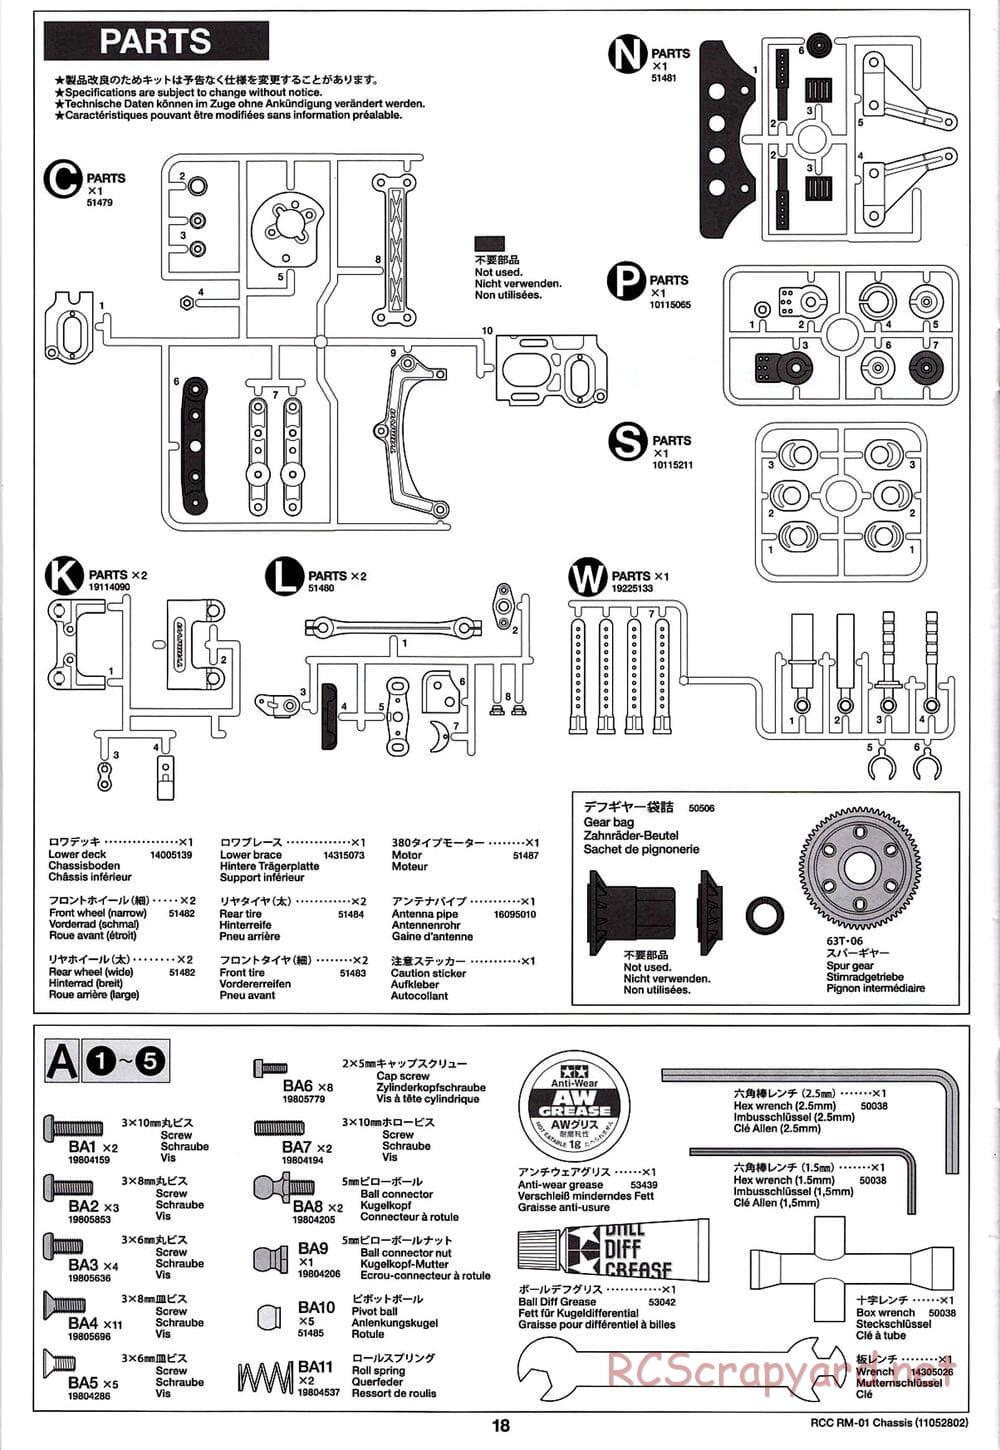 Tamiya - RM-01 Chassis - Manual - Page 18